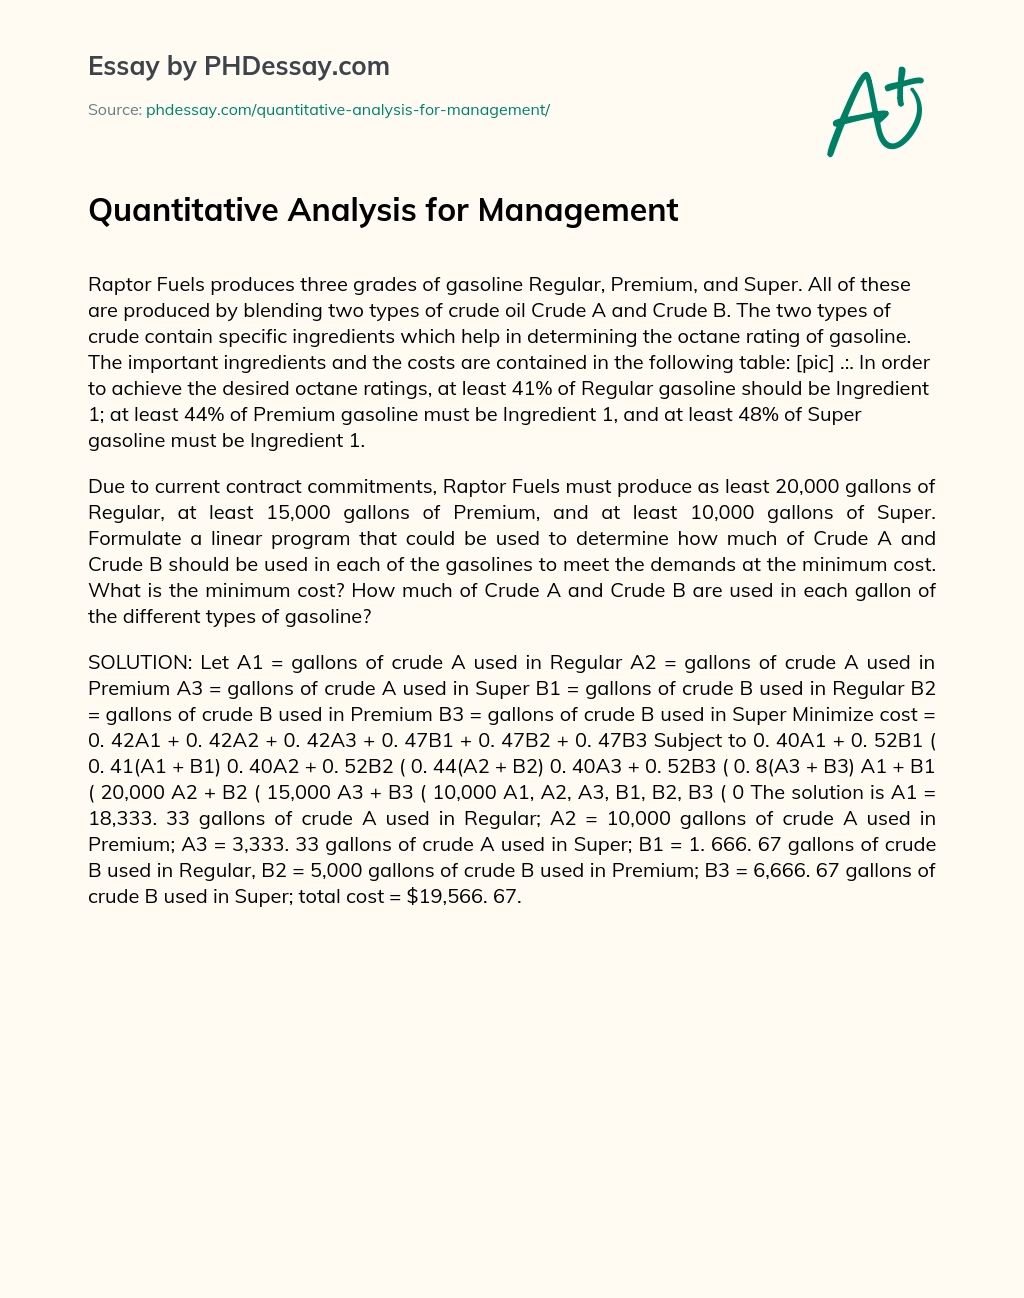 Quantitative Analysis for Management essay